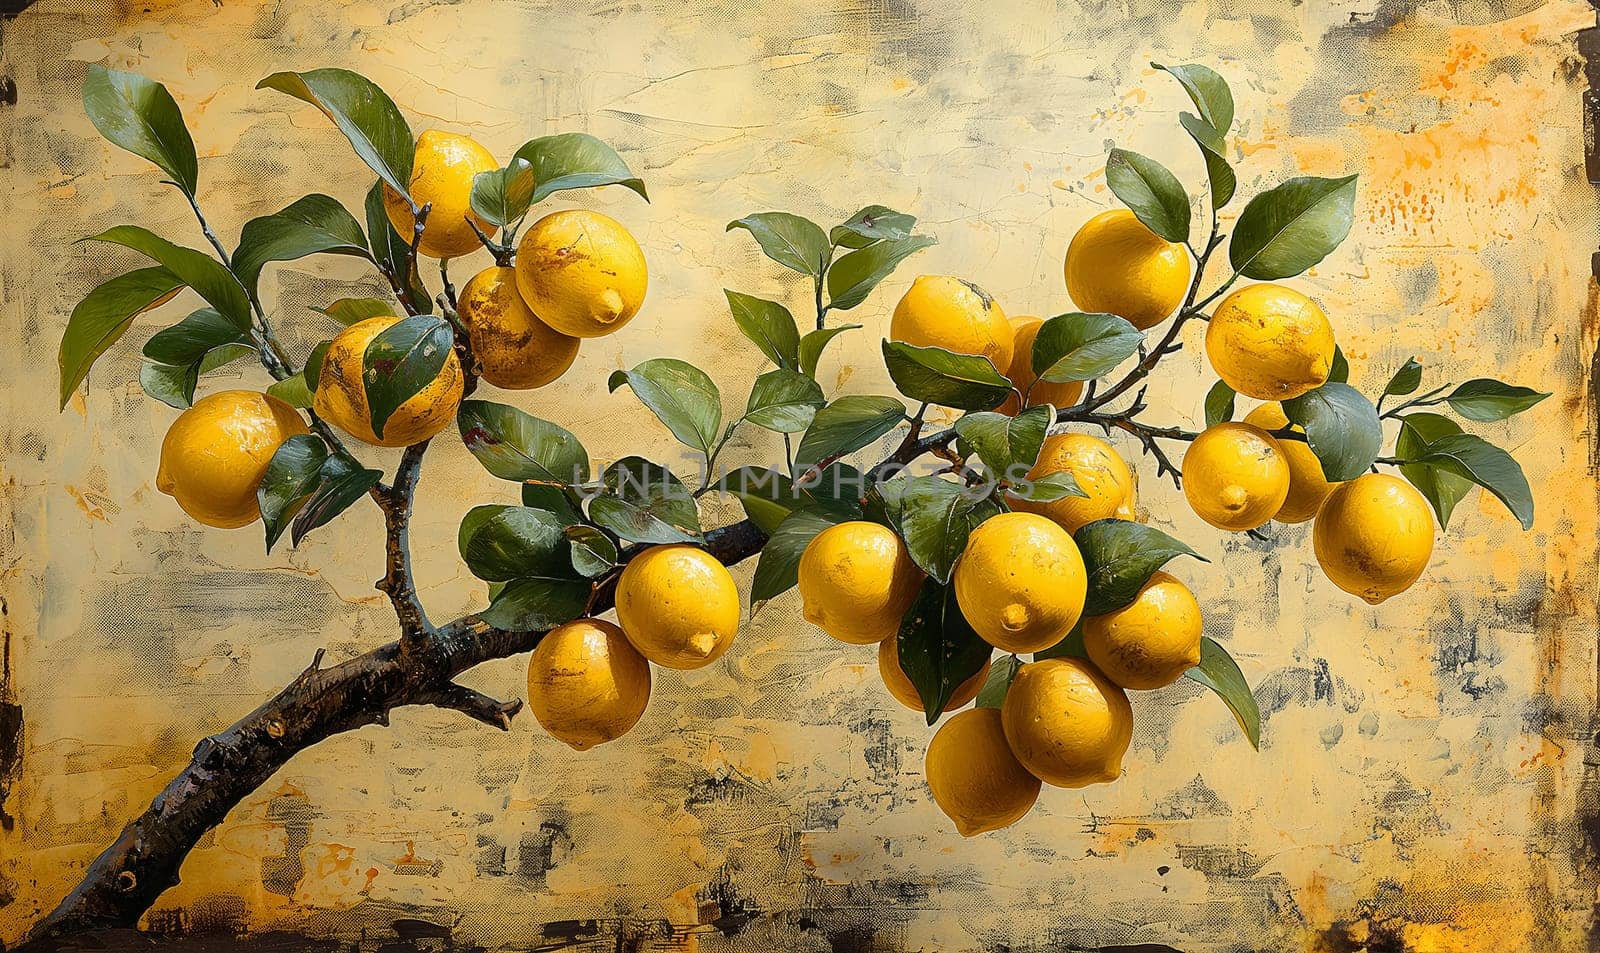 Ripe Lemons on Branch Against Gold Backdrop by Fischeron